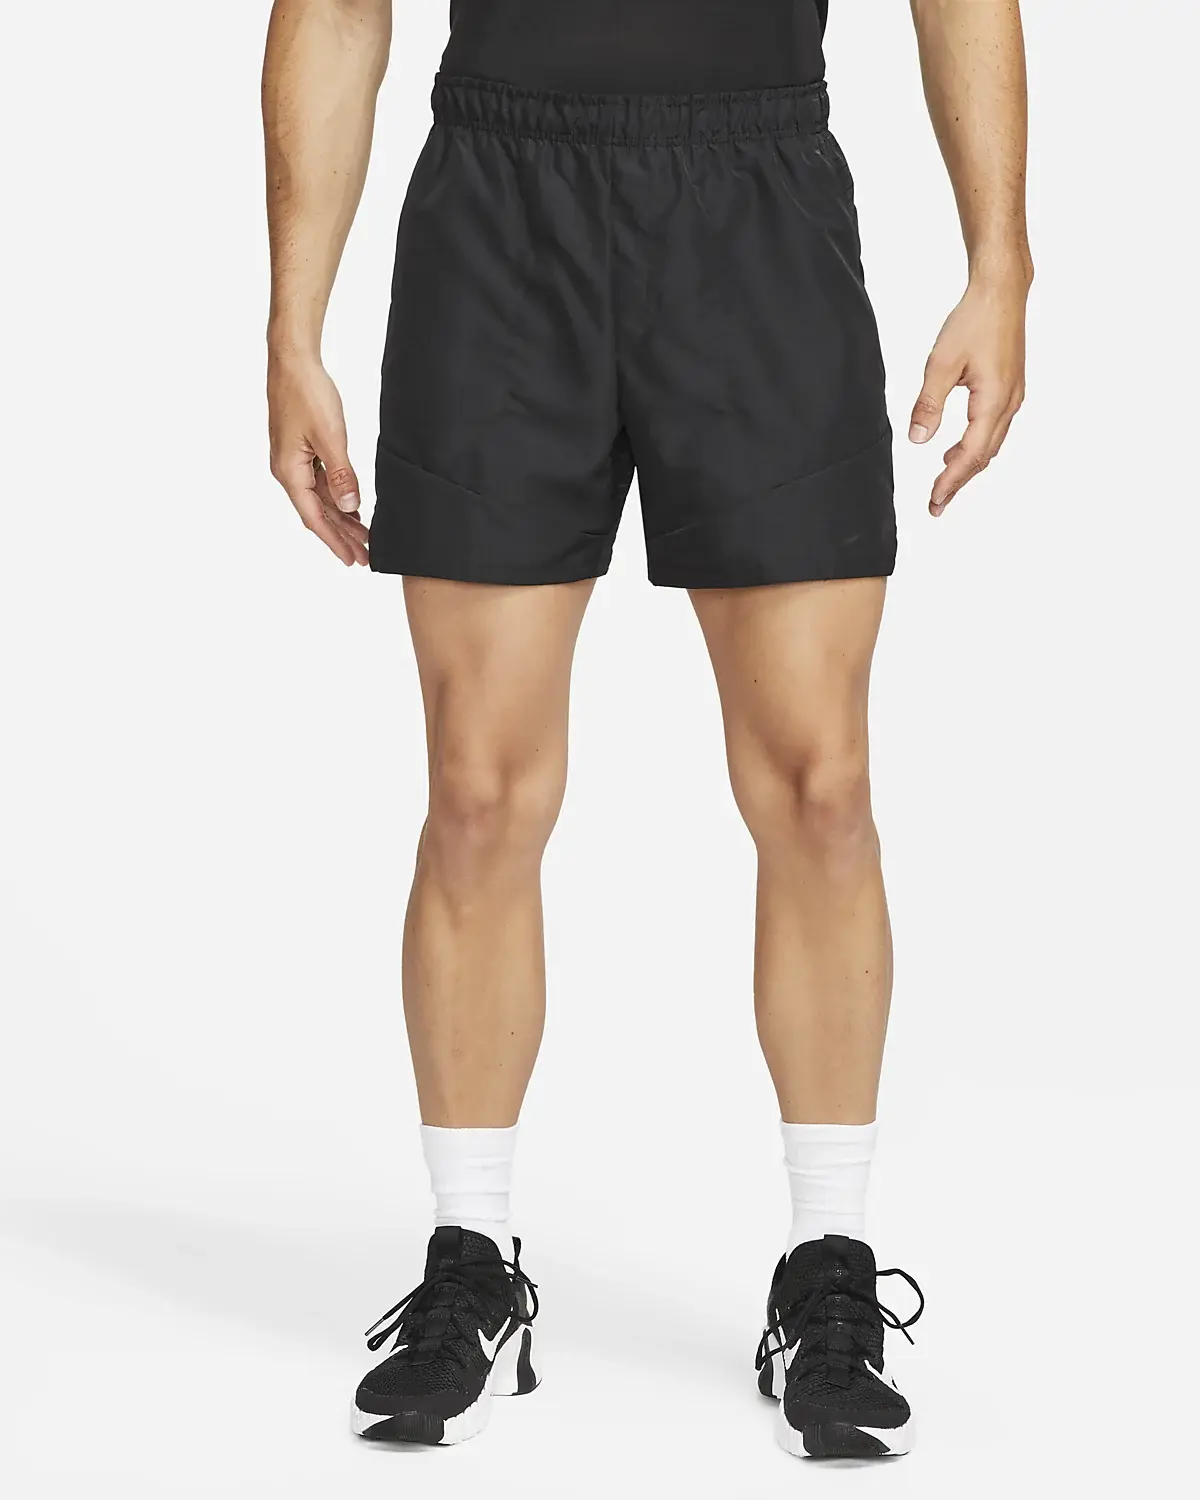 Nike Shorts versátiles de 15 cm sin forro para hombre. 1